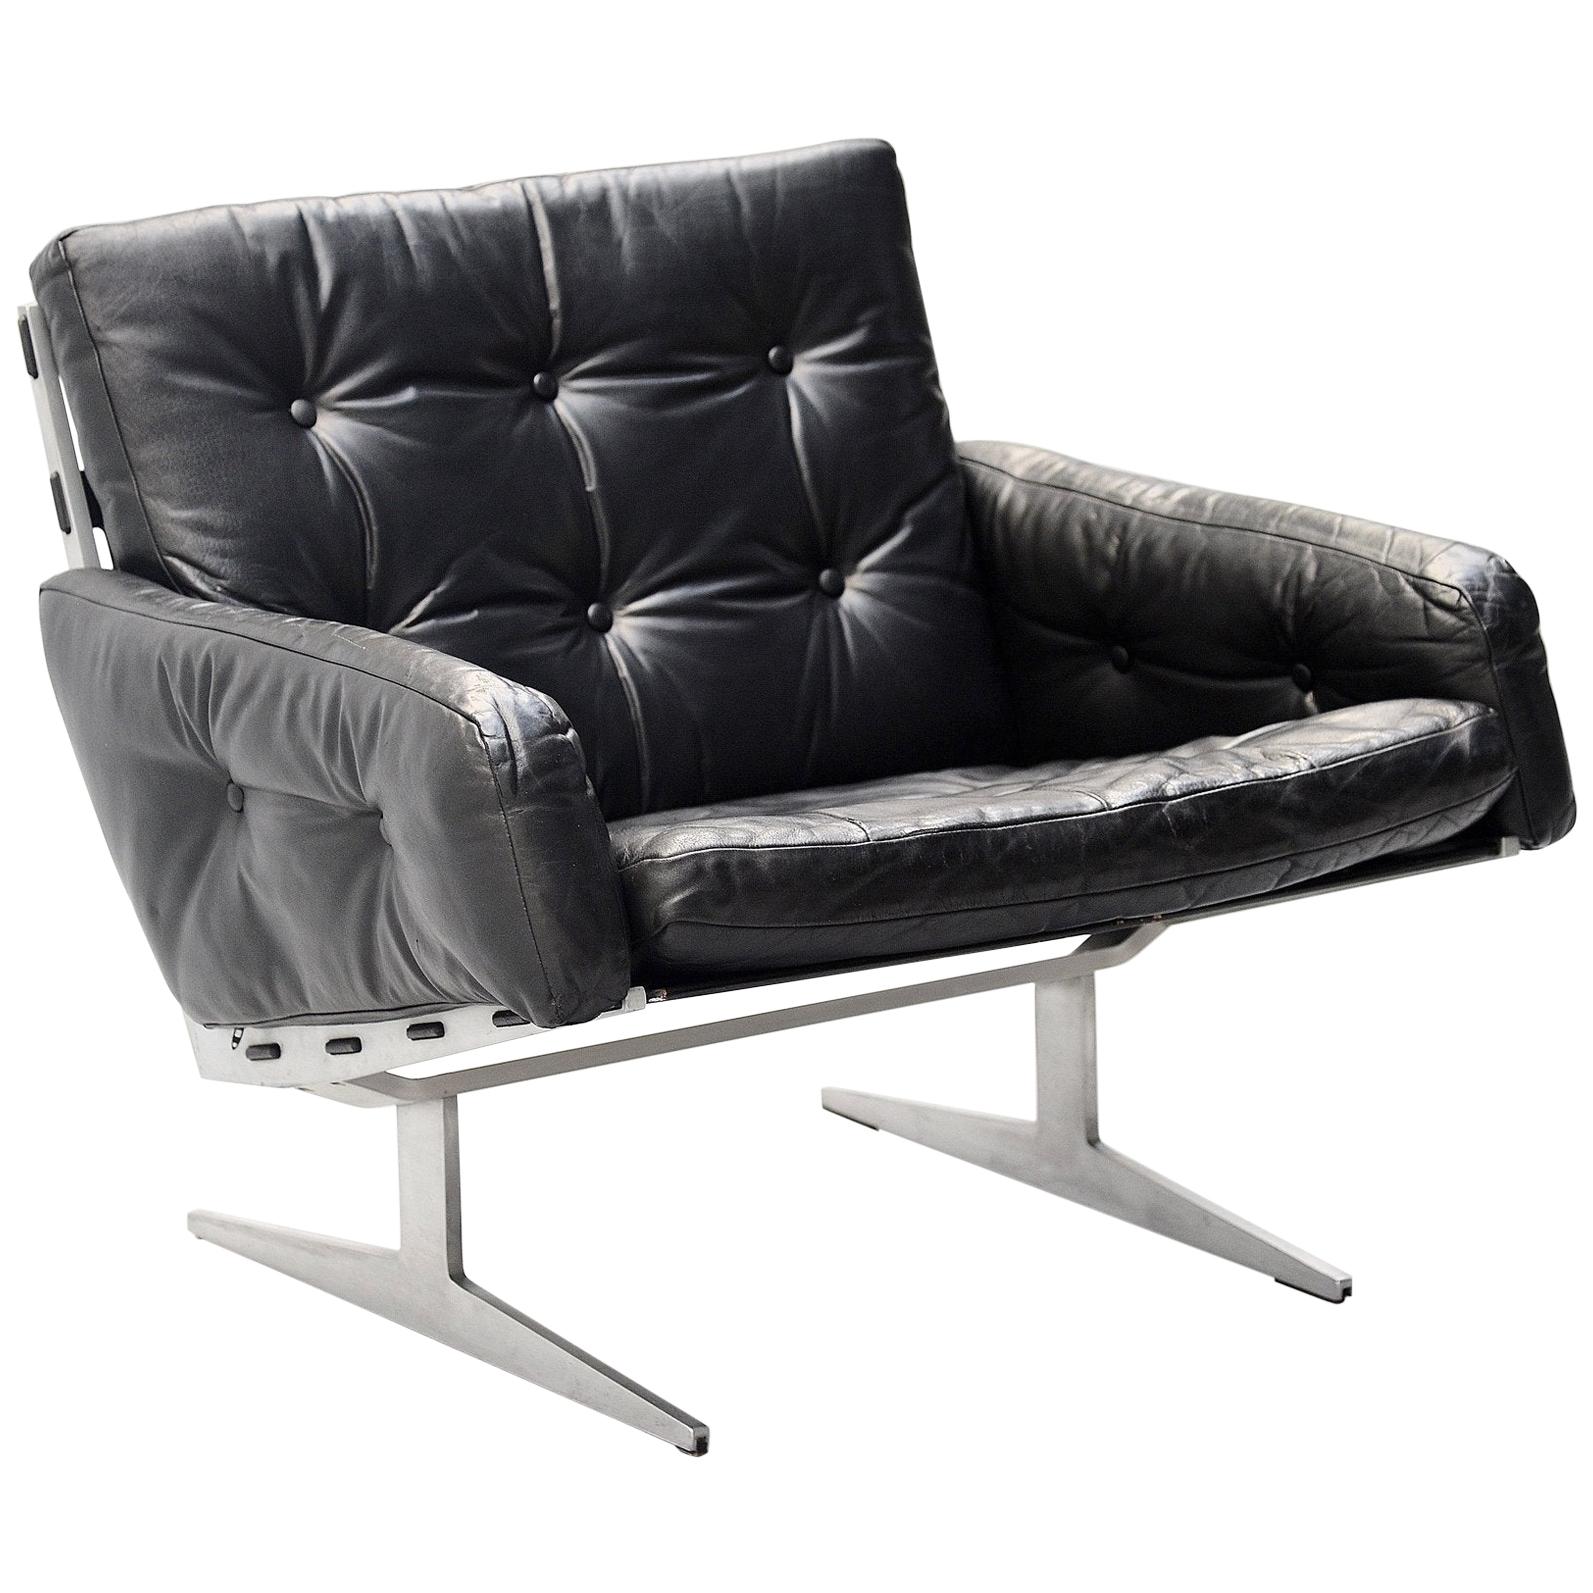 Paul Leidersdorff Lounge Chair Black Leather, Denmark, 1965